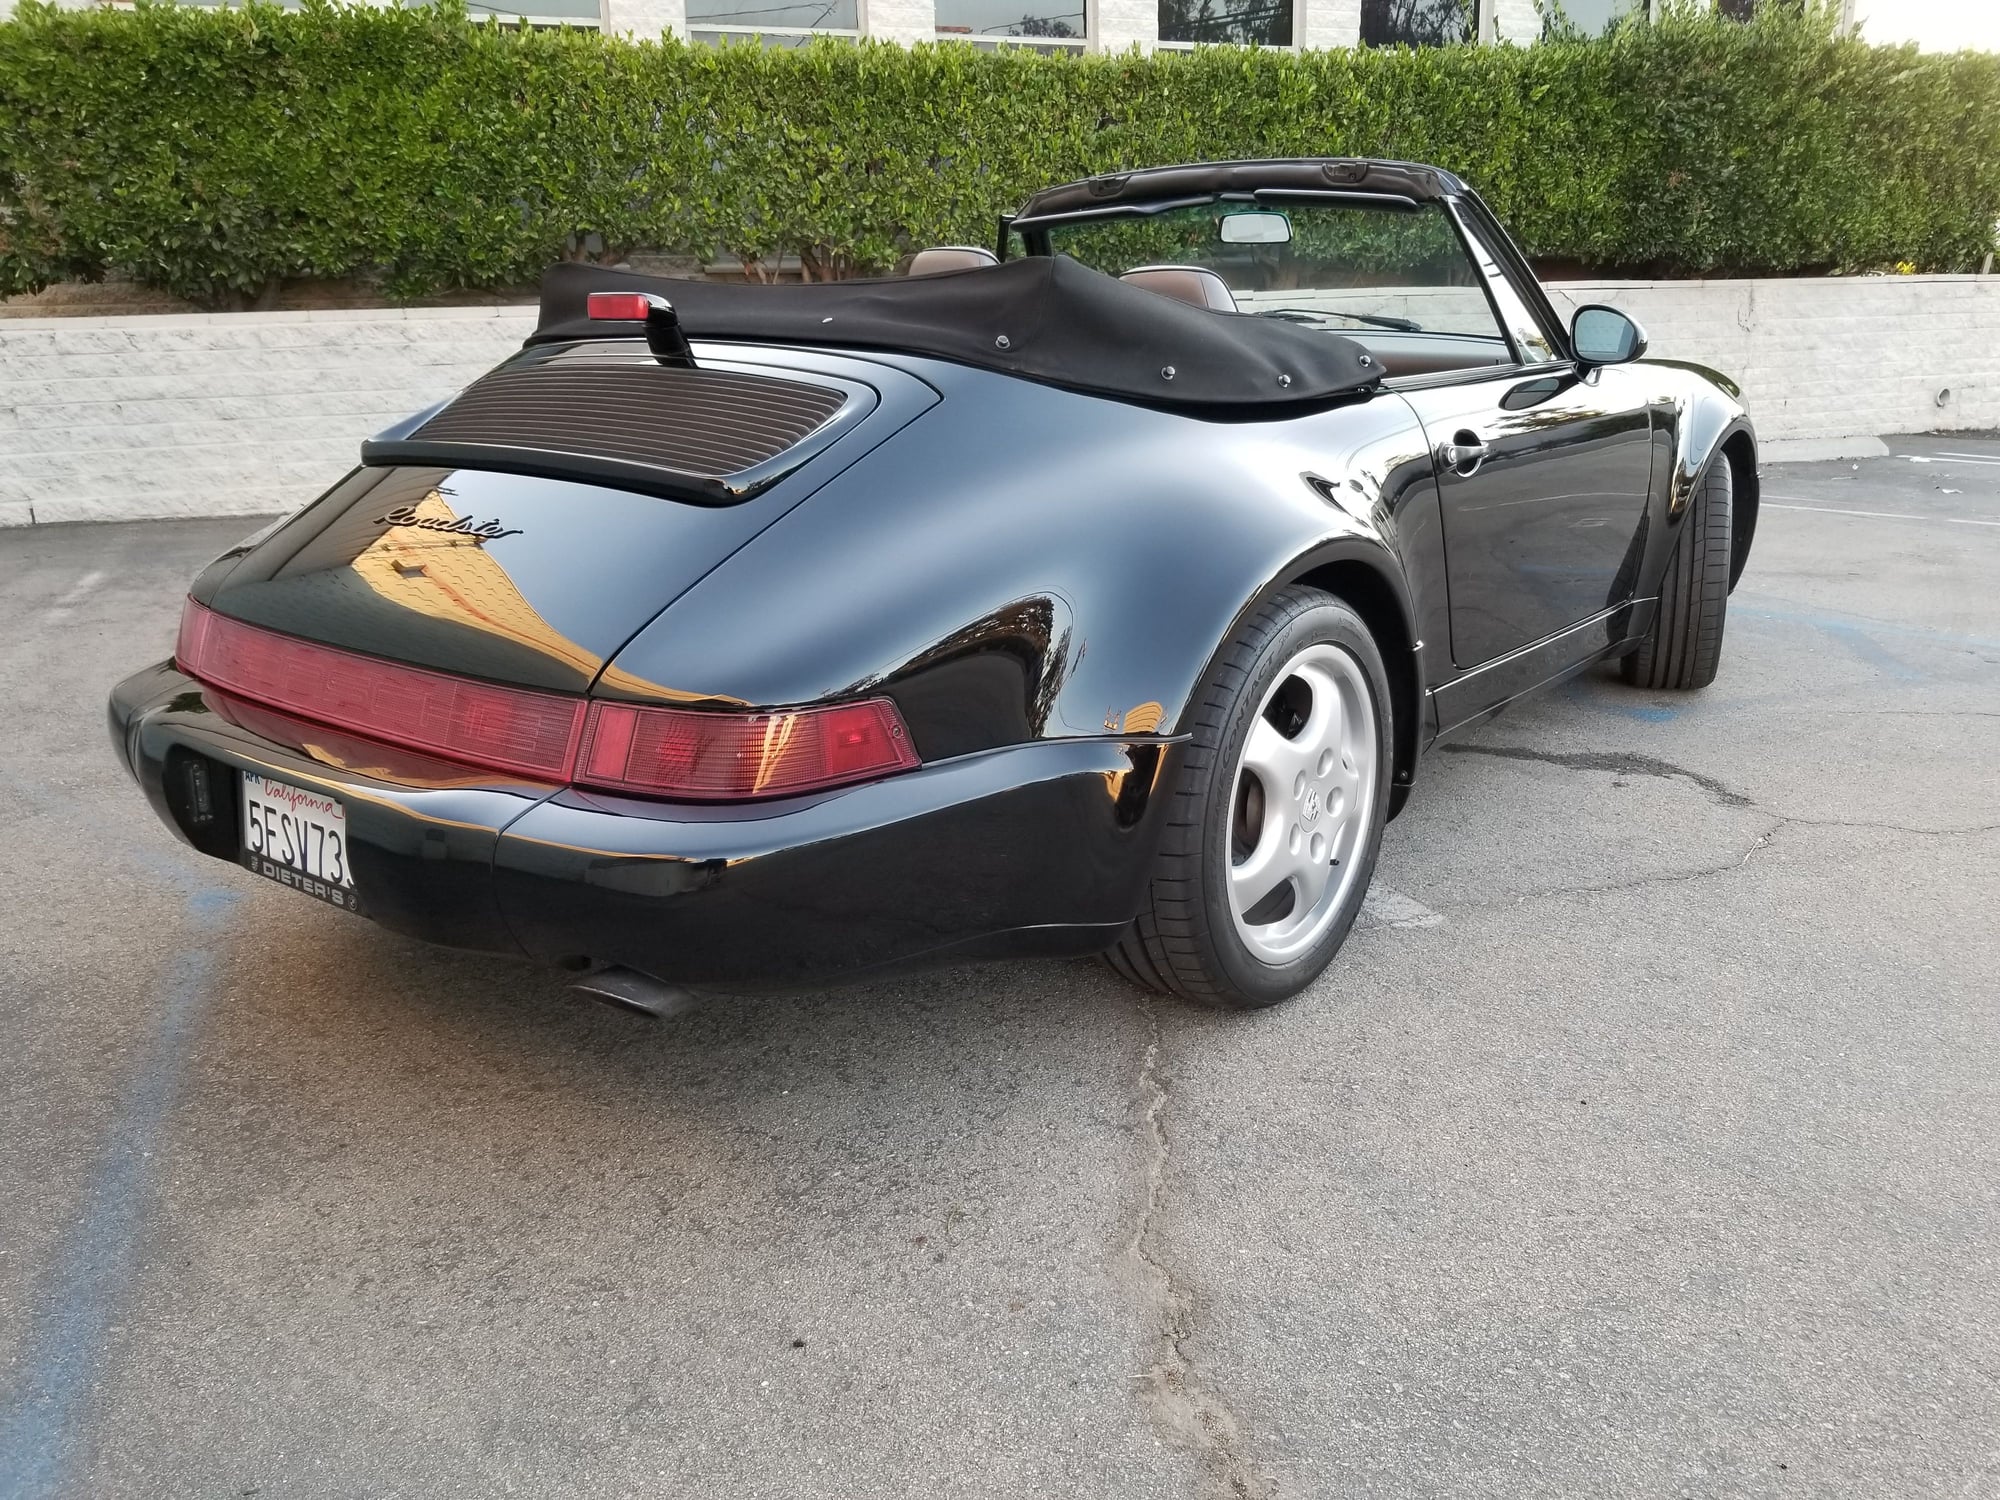 1992 Porsche 911 - 1992 Porsche America Roadster ***1 of 250 built*** - Used - VIN WP0CB2964NS460560 - 55,300 Miles - 6 cyl - 2WD - Manual - Convertible - Black - Escondido, CA 92029, United States